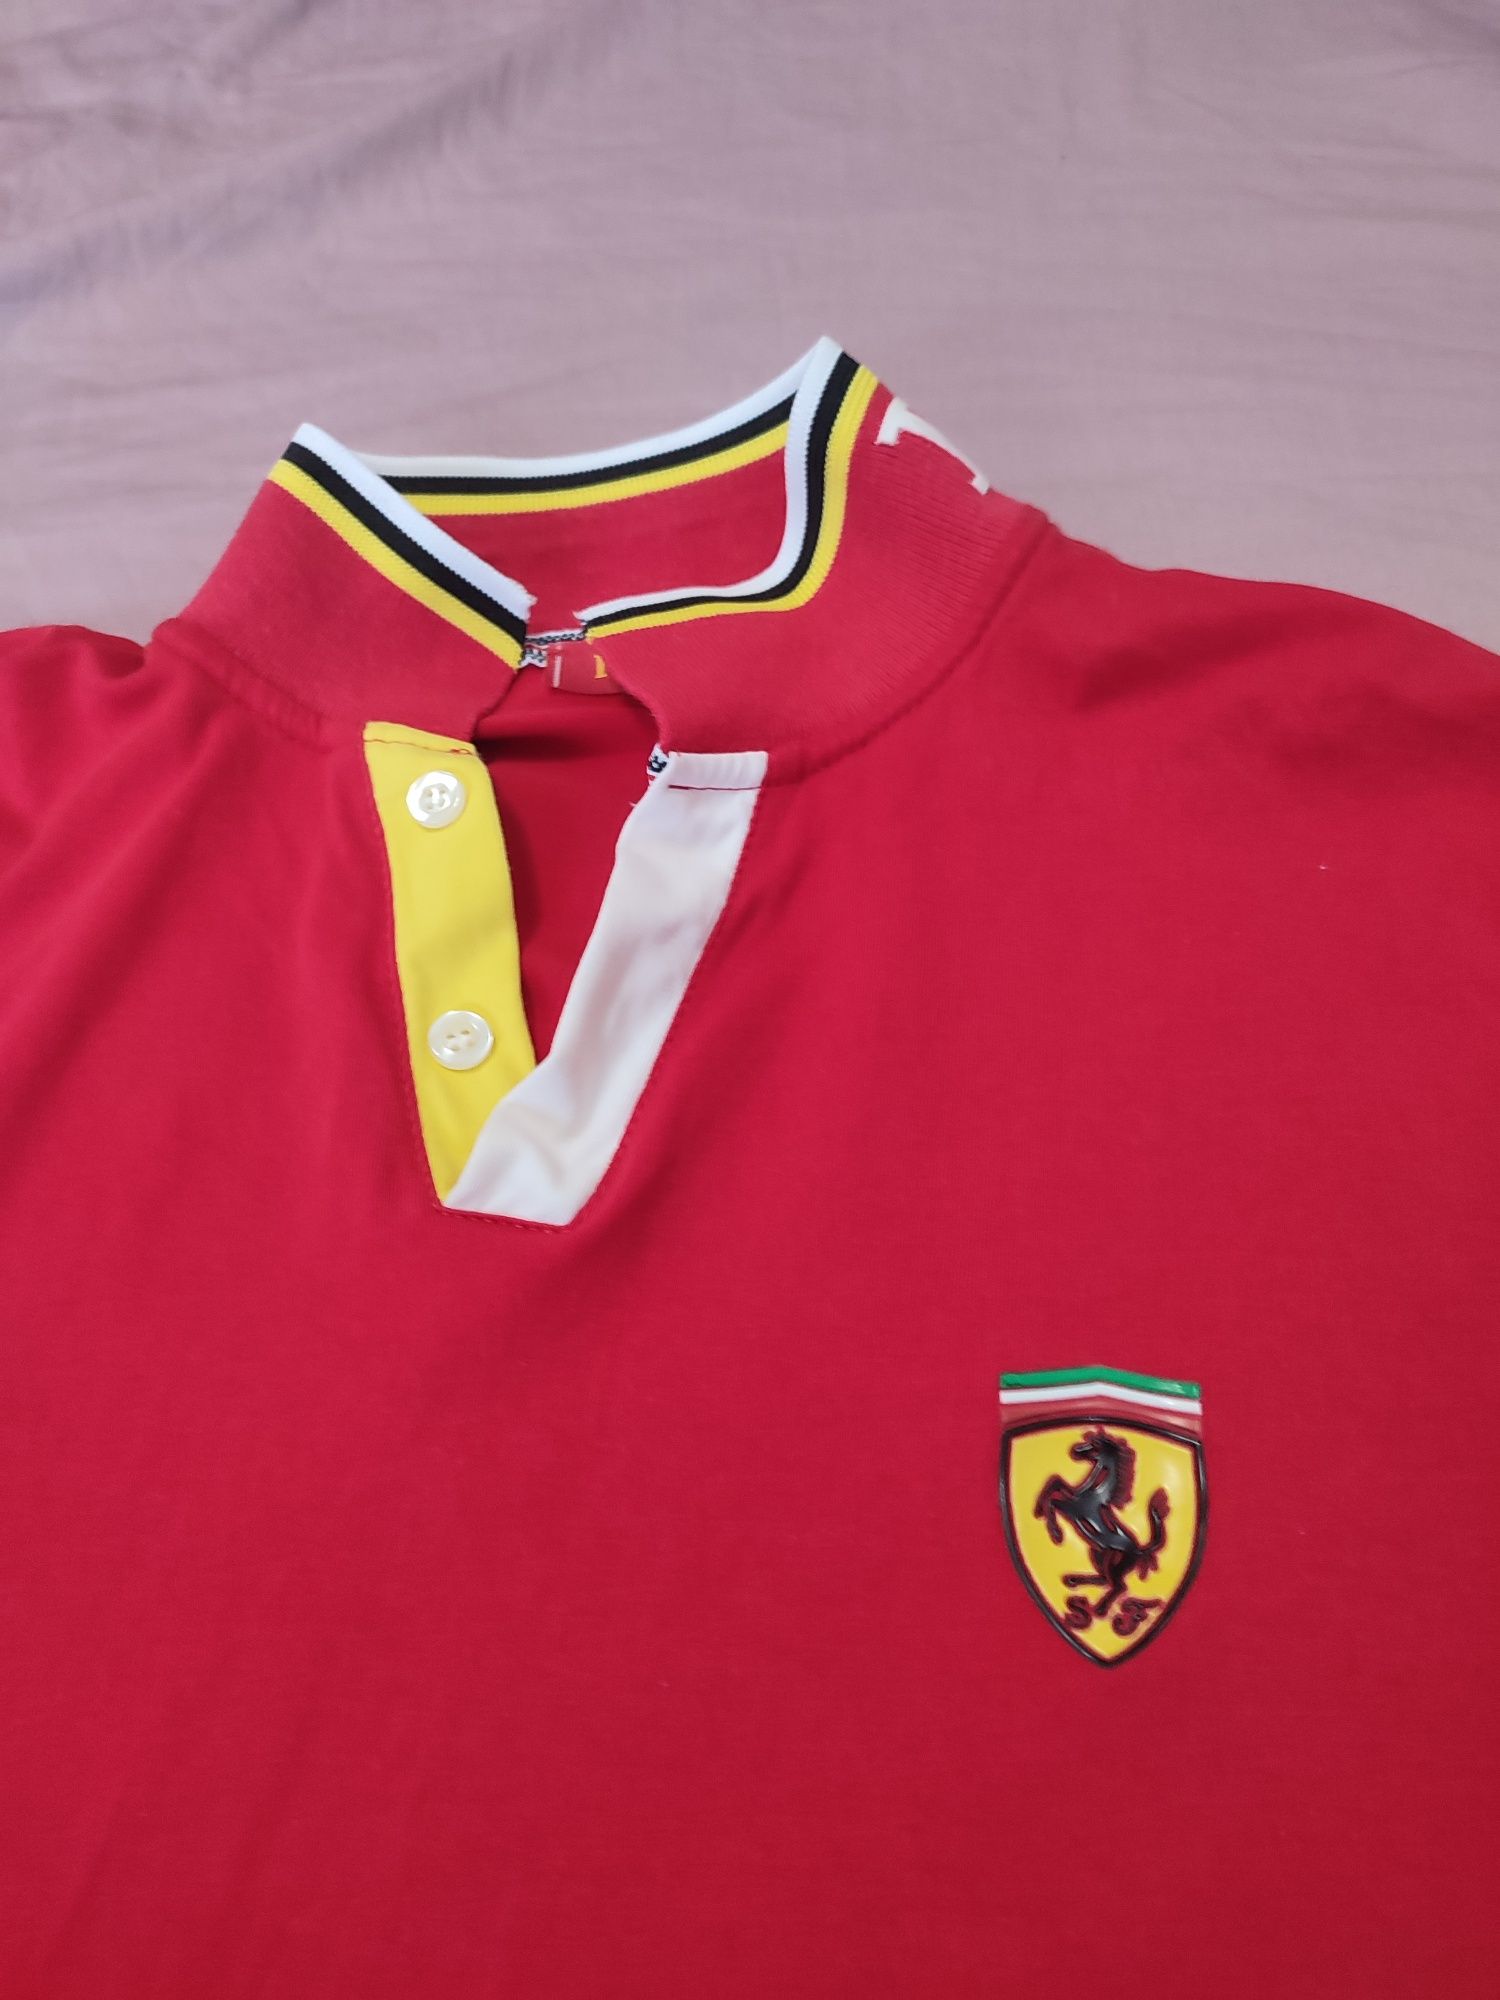 Футболка Ferrari размер XL